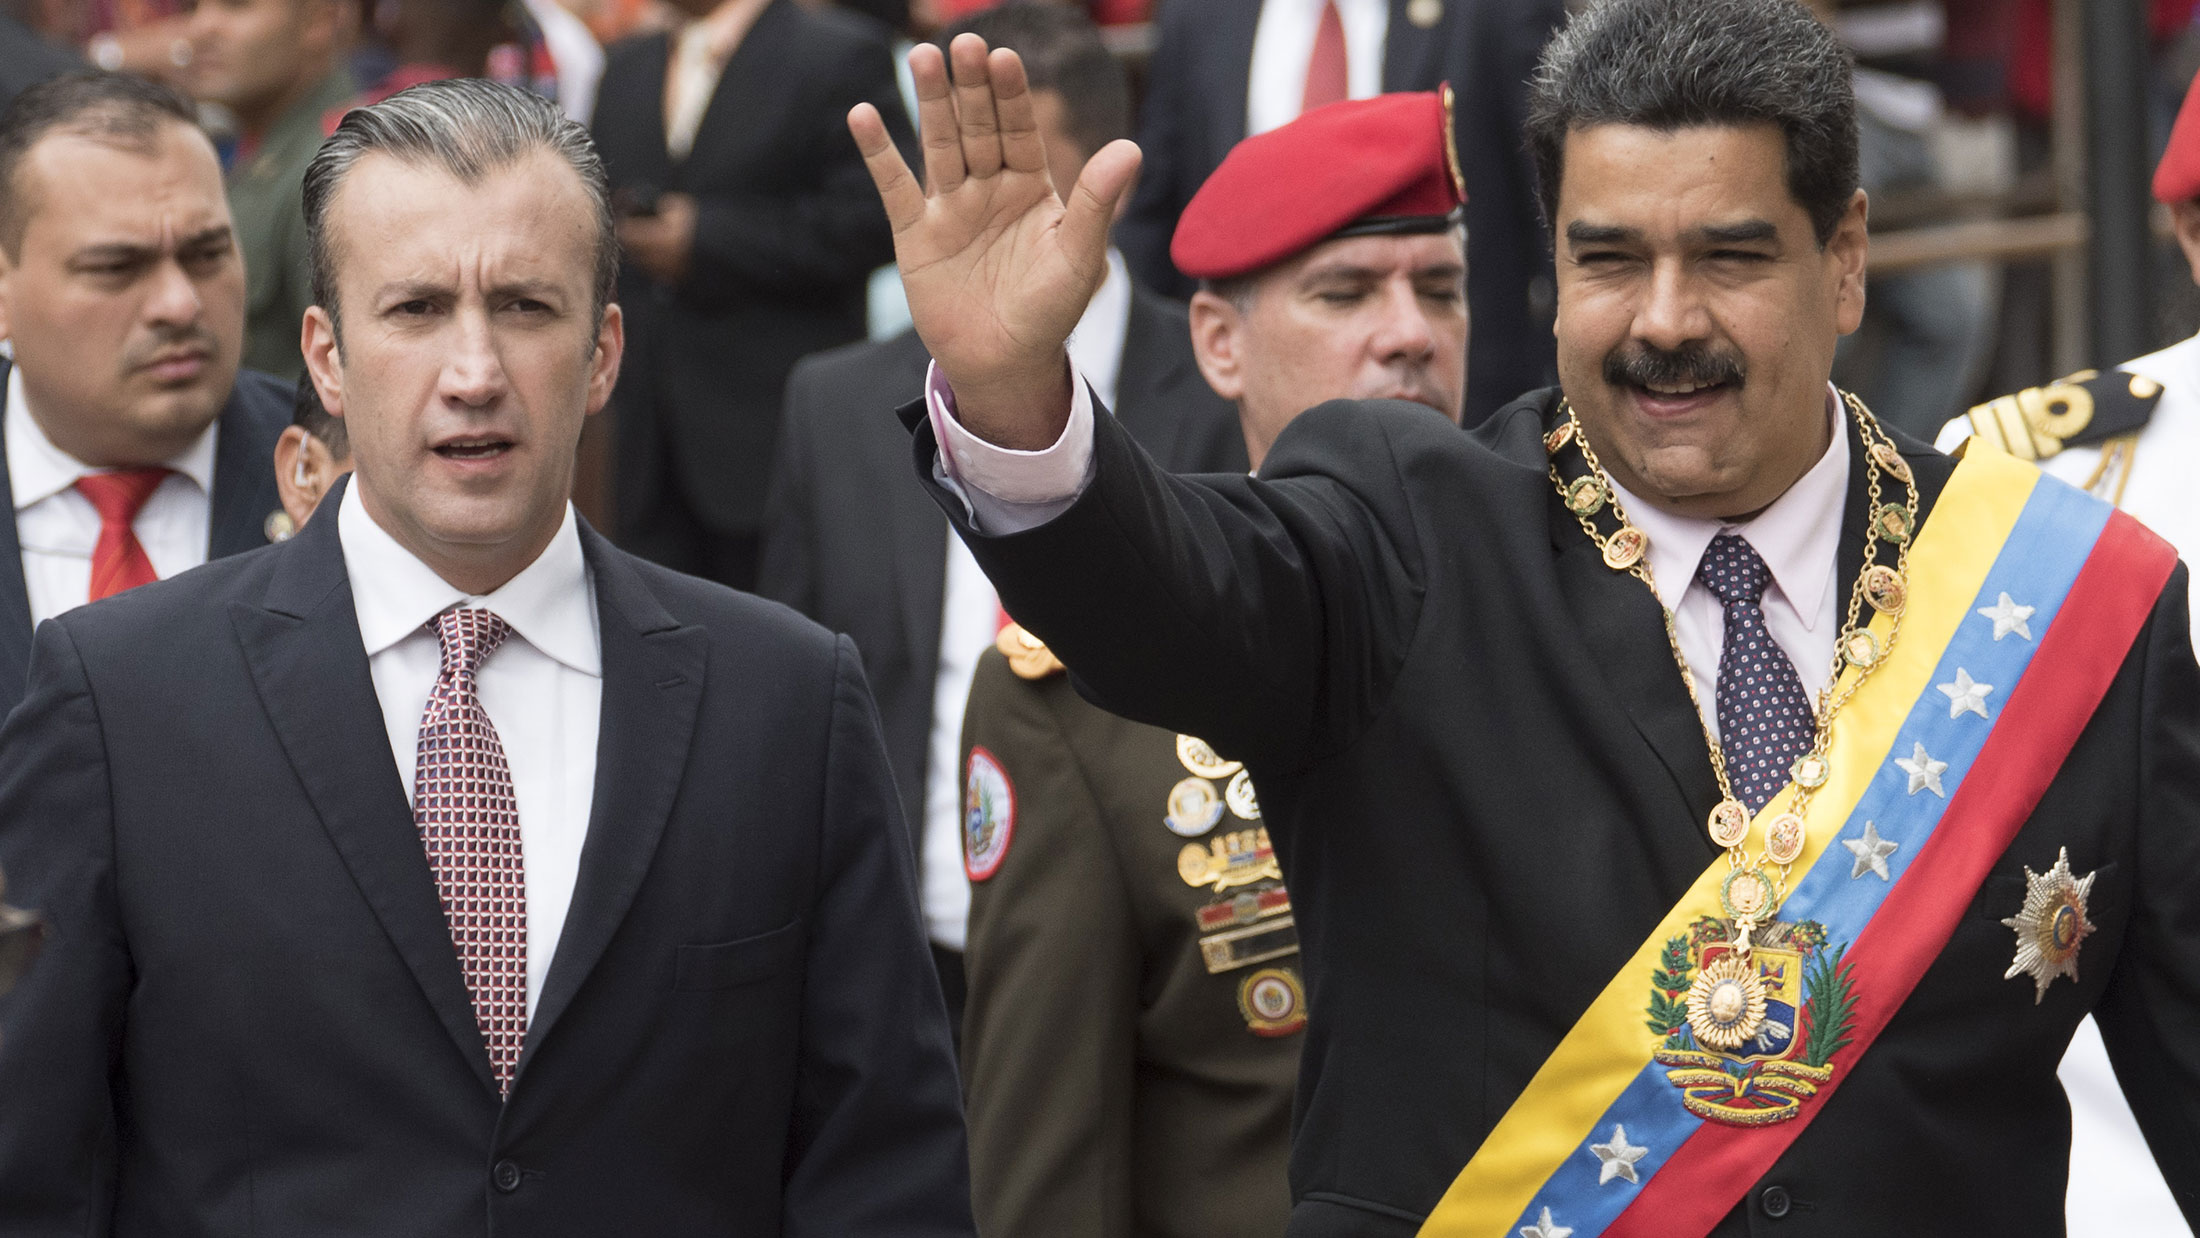 VenezuelaVicepresidentPresident